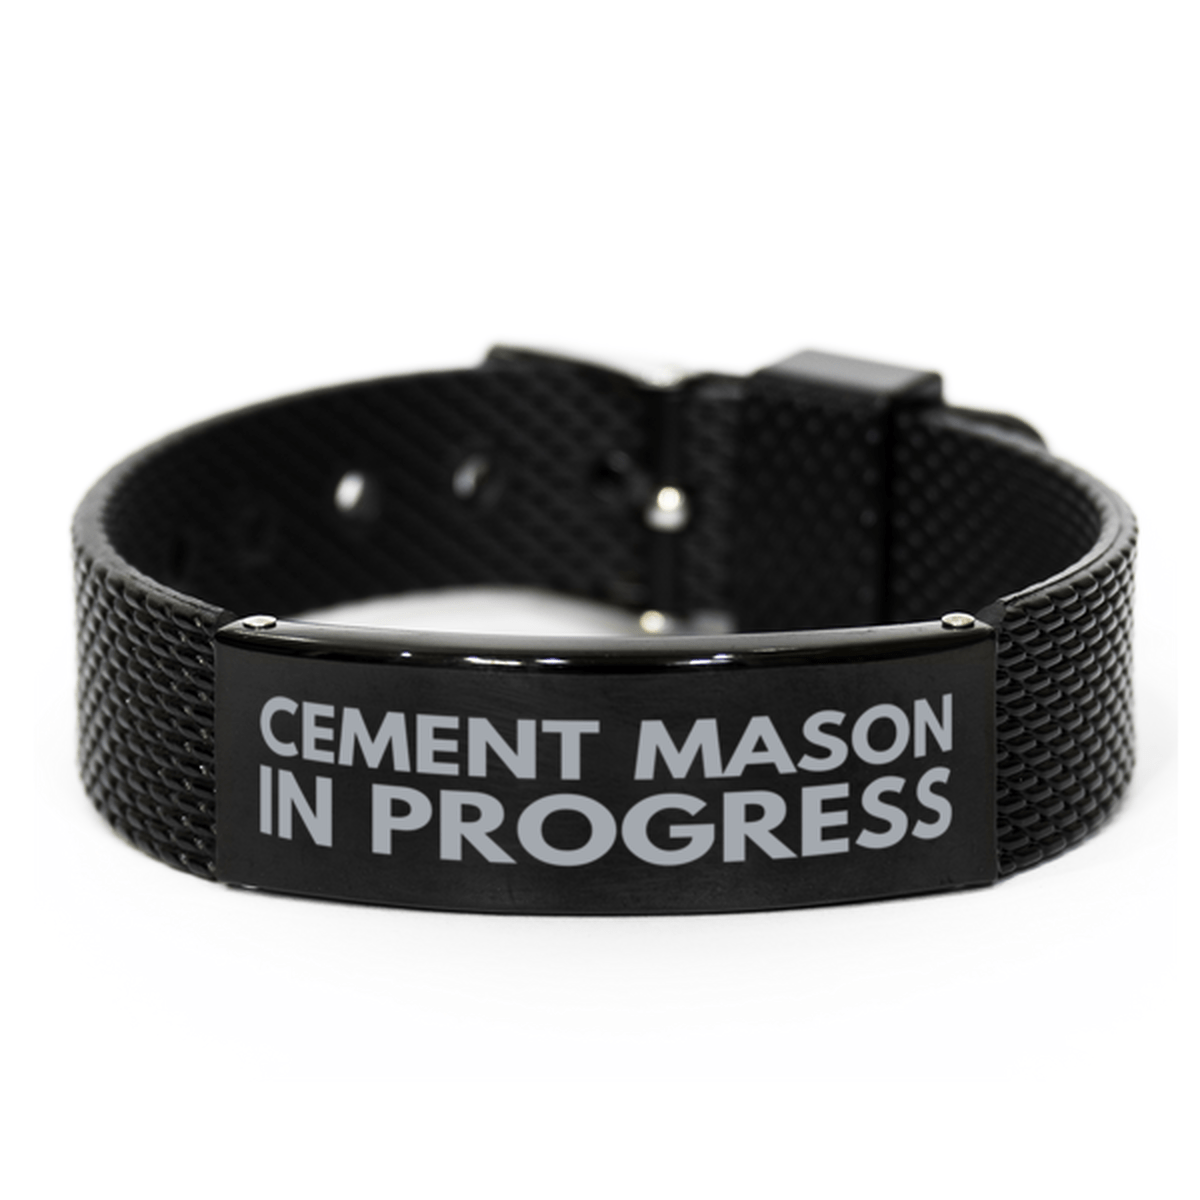 Inspirational Cement Mason Black Shark Mesh Bracelet, Cement Mason In Progress, Best Graduation Gifts for Students